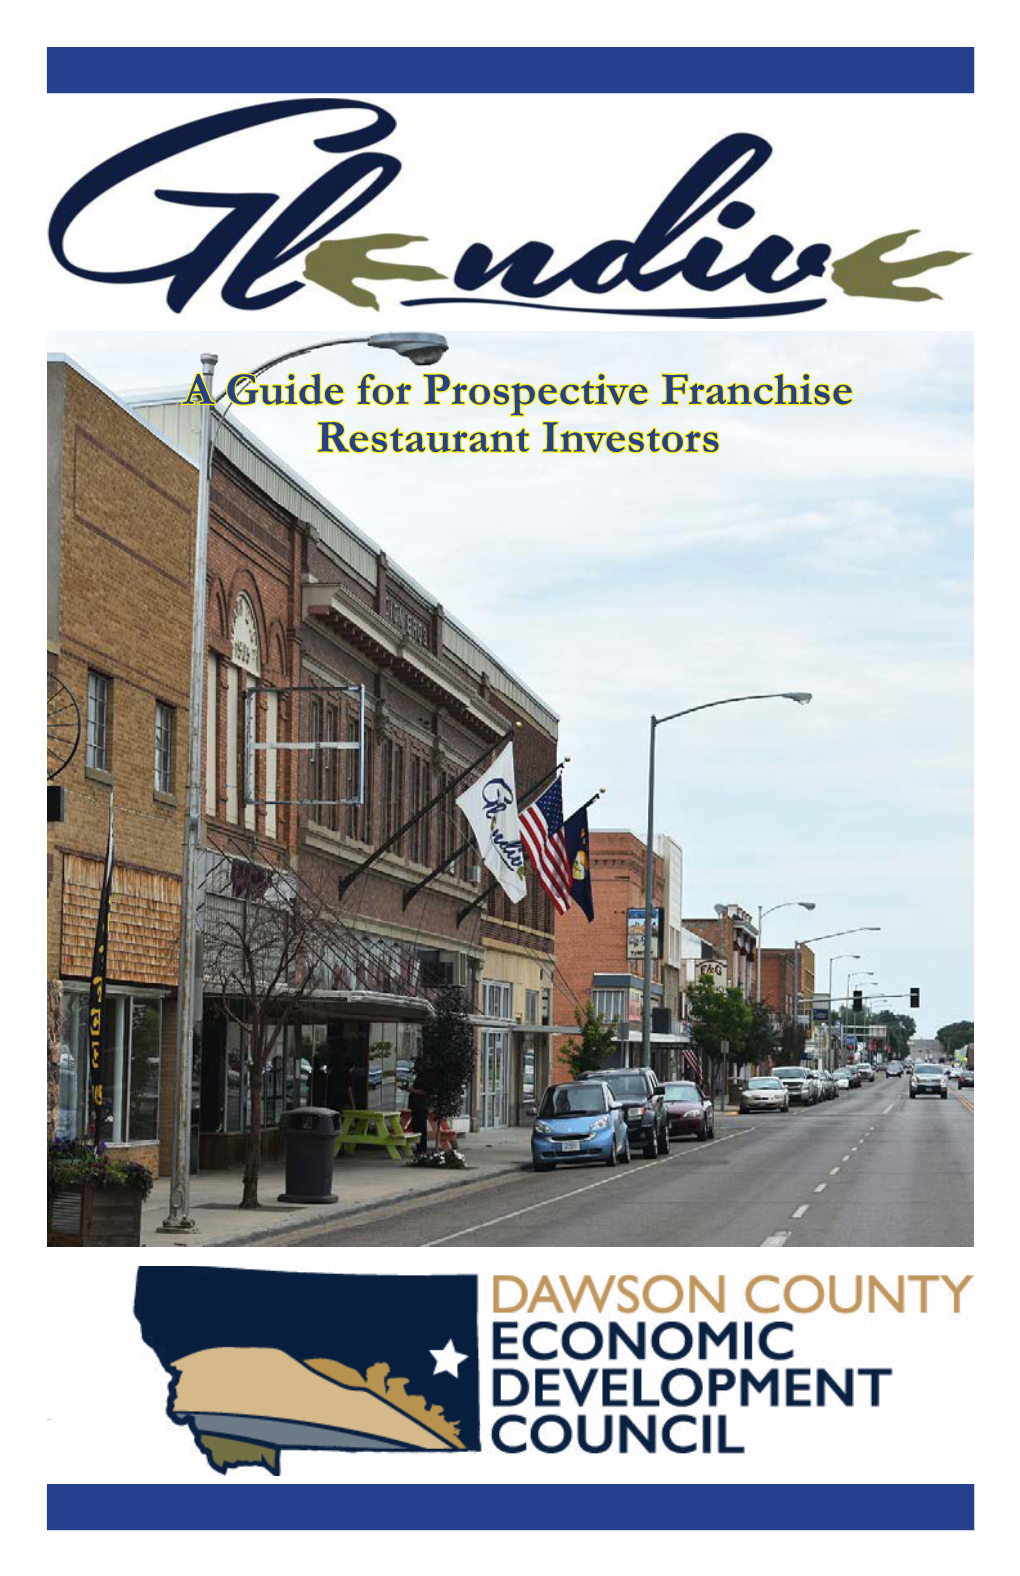 A Guide for Prospective Franchise Restaurant Investors